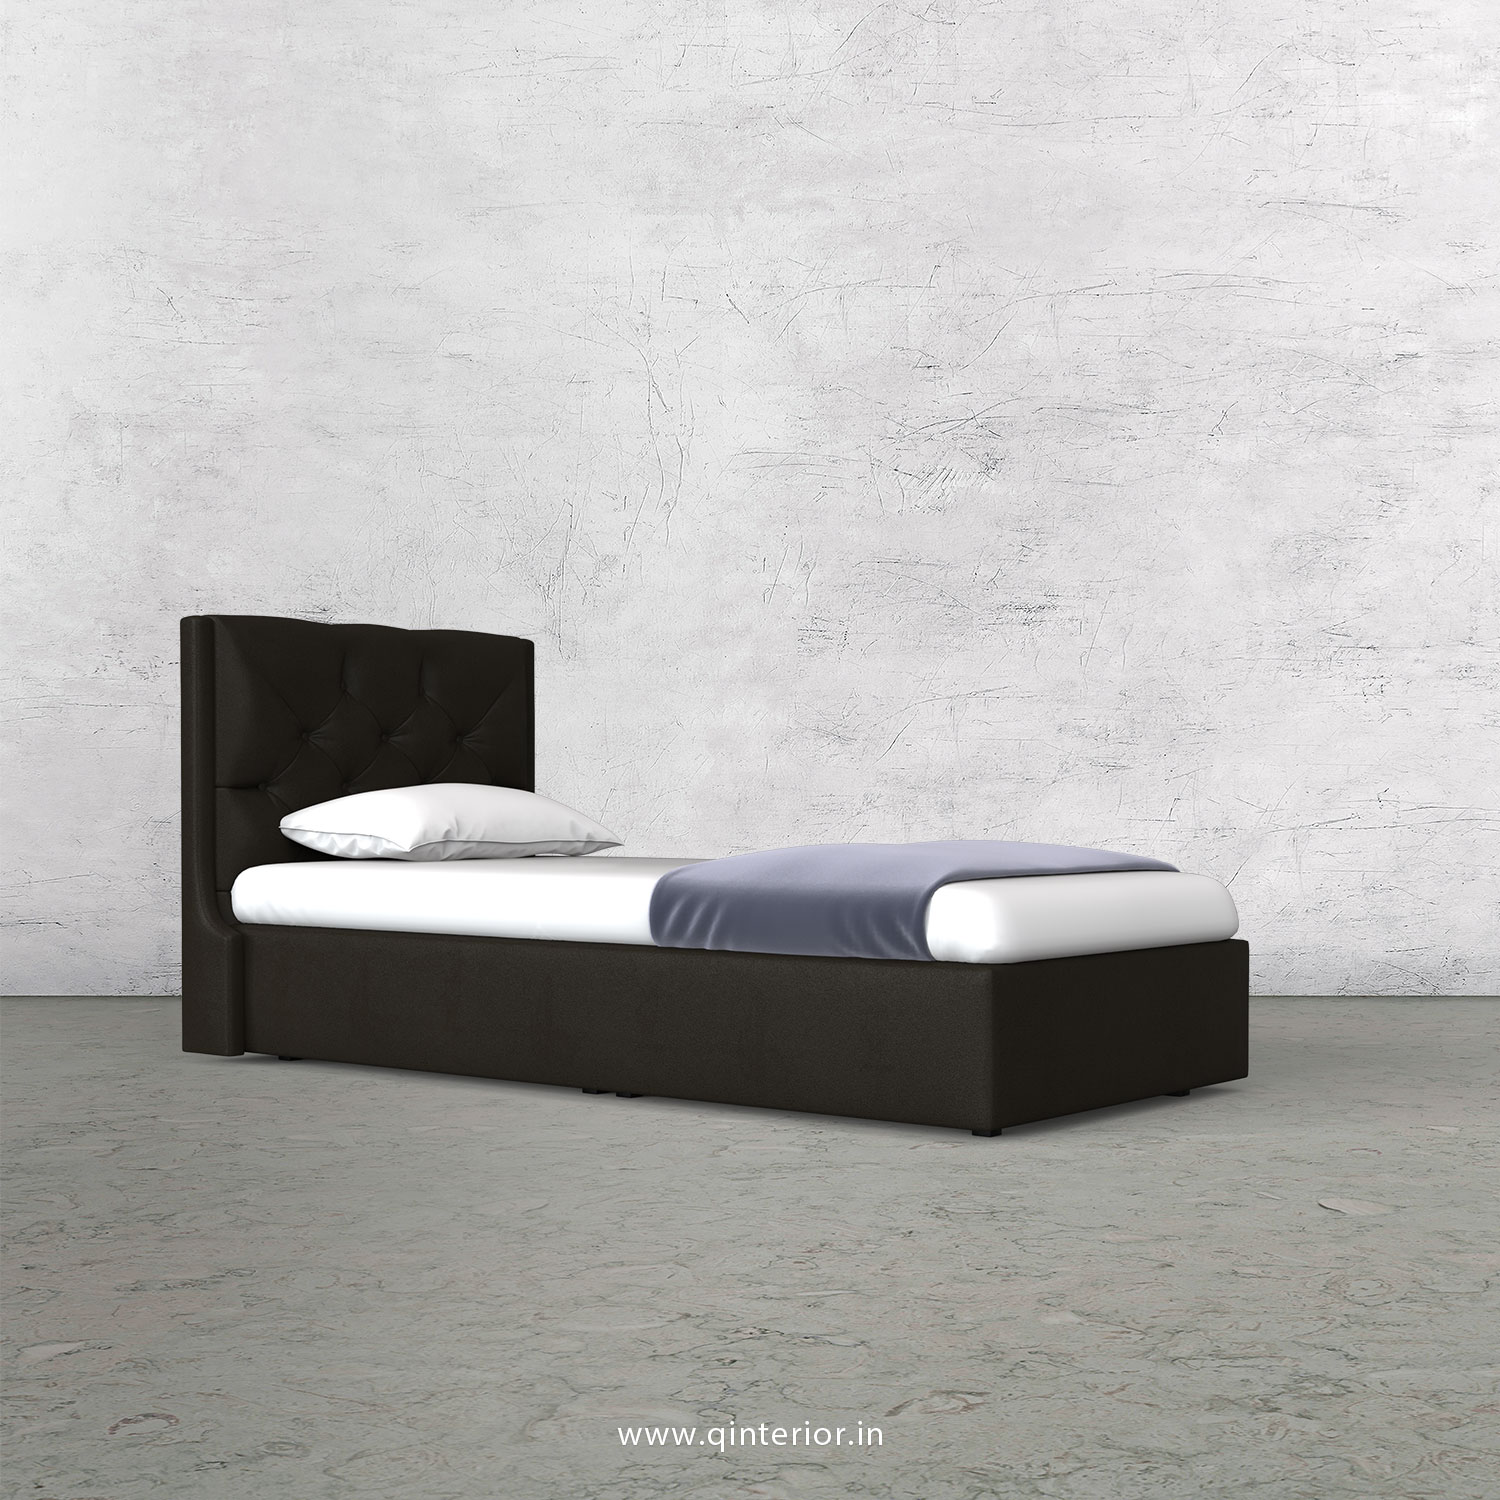 Scorpius Single Bed in Fab Leather Fabric - SBD009 FL11